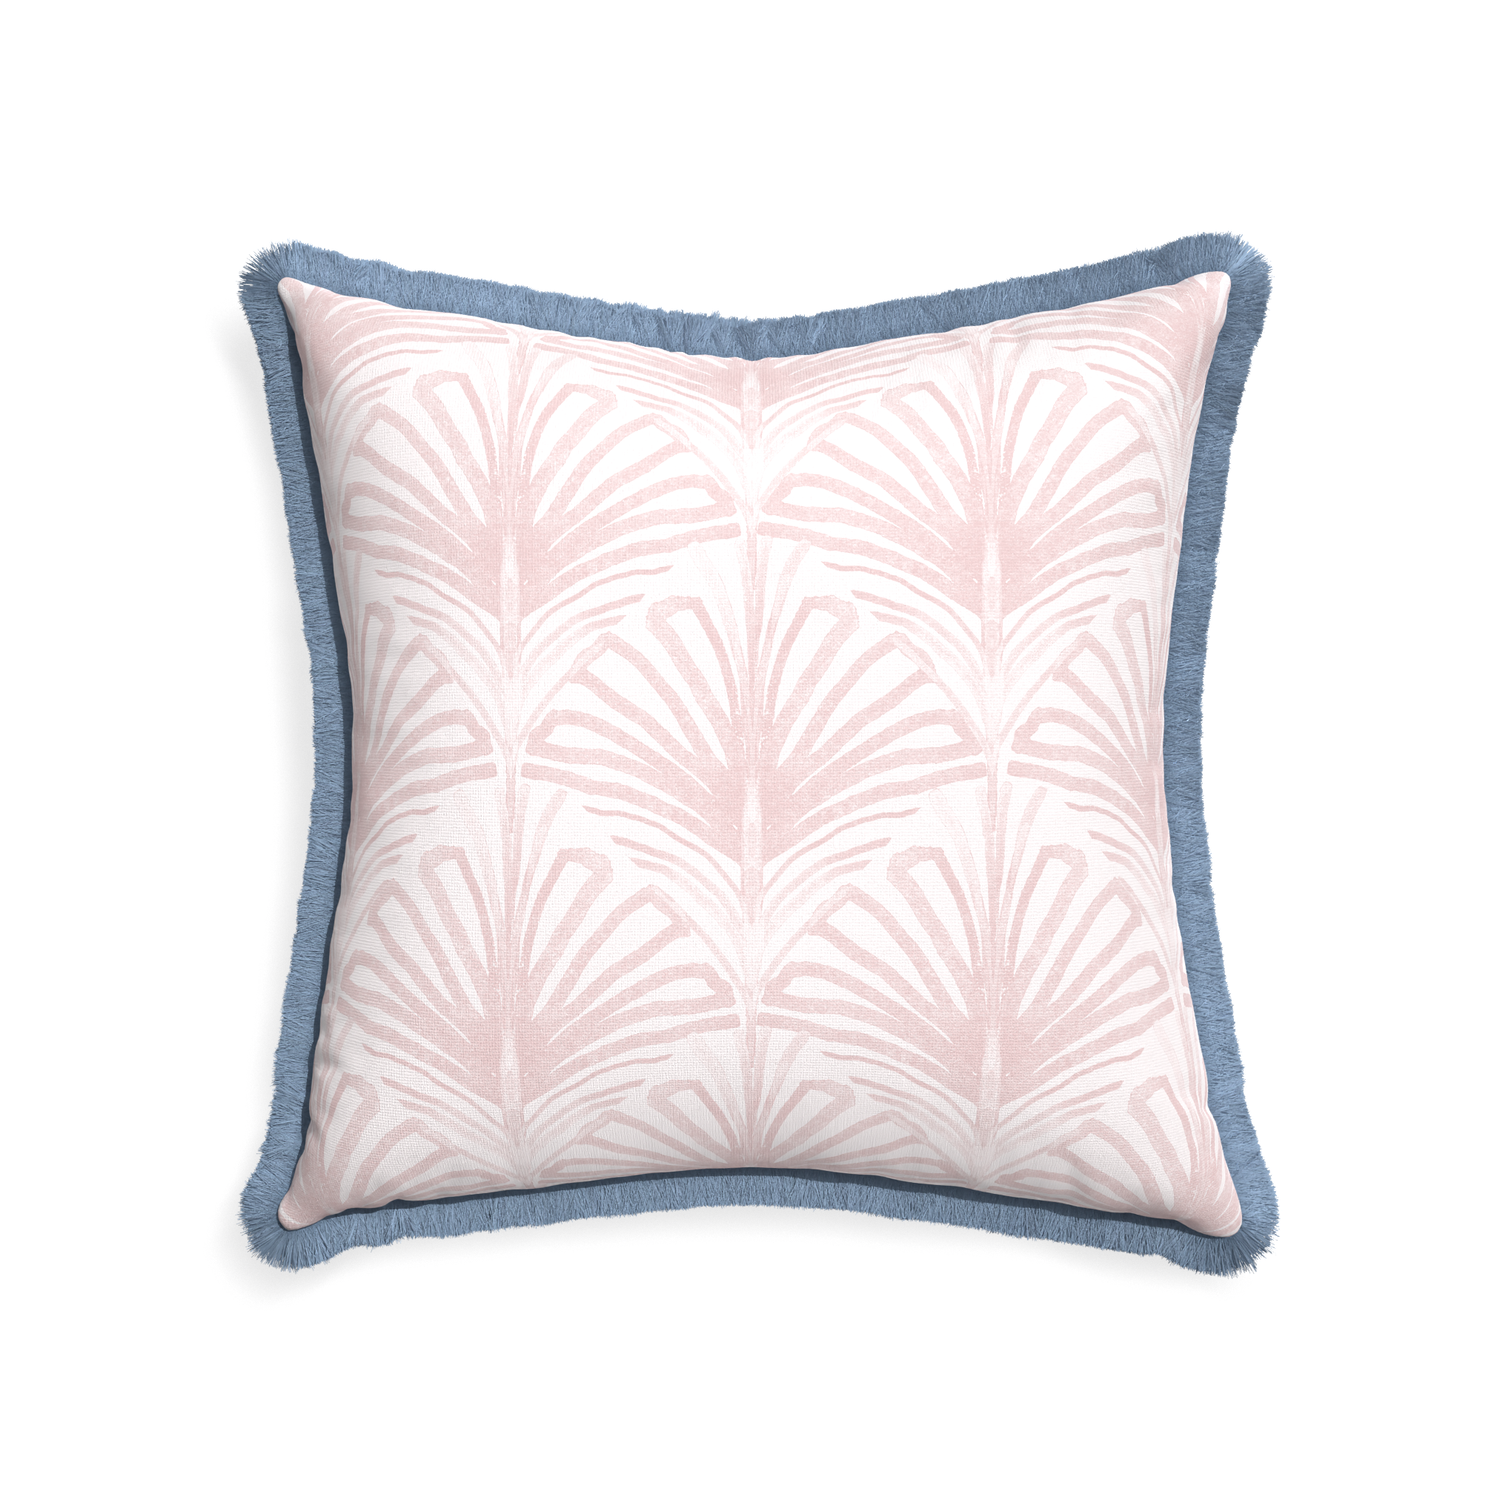 22-square suzy rose custom pillow with sky fringe on white background